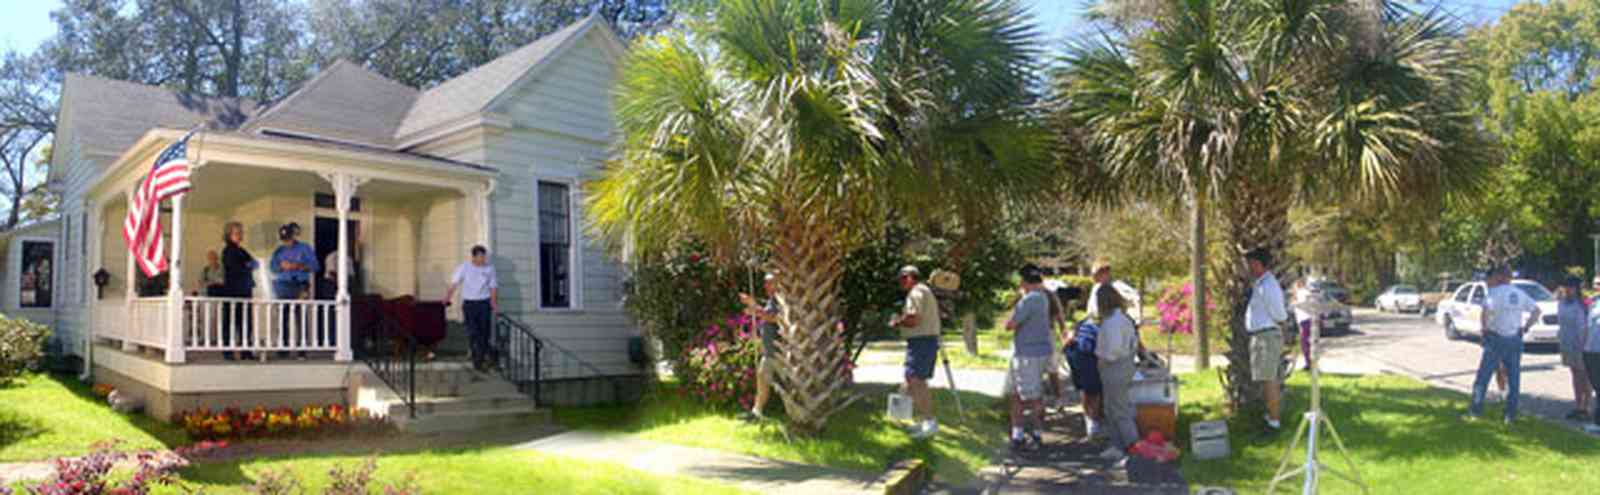 East-Hill:-Jackson-Hill-Antiques_tmaat24.jpg:  victorian cottage, antique shop, palm trees, 